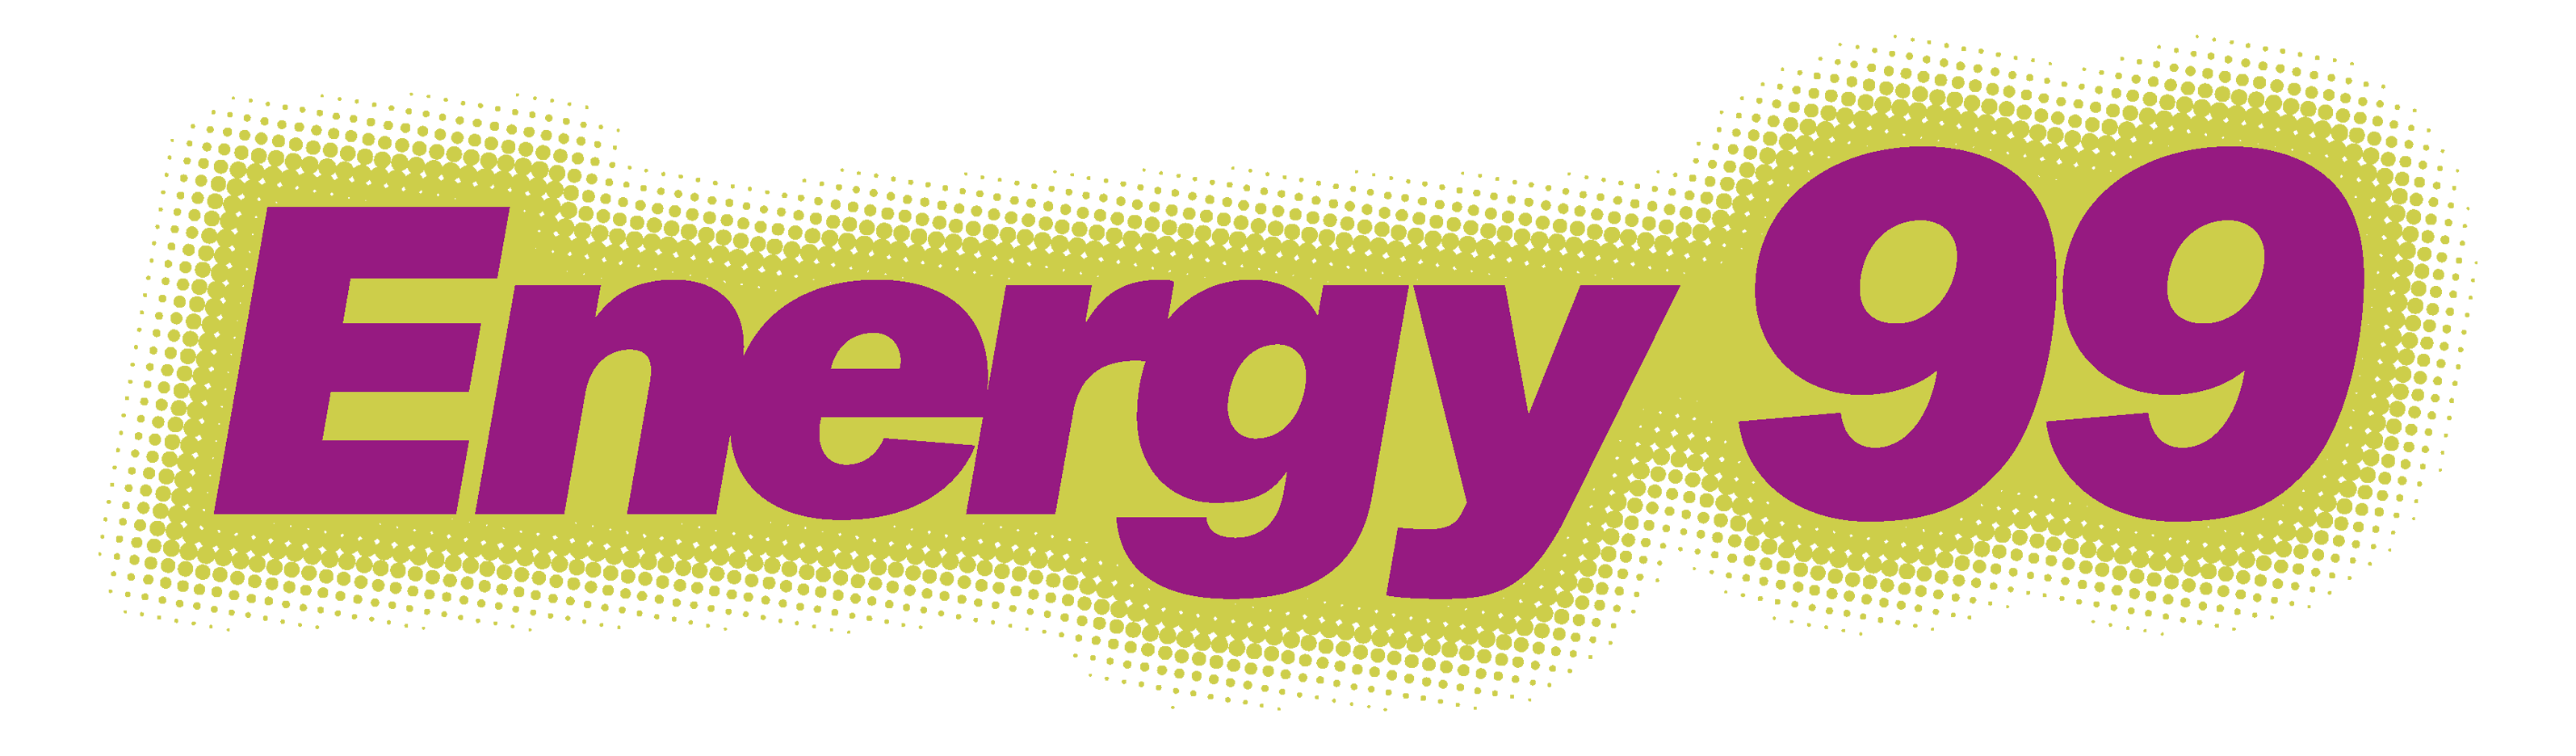 Energy 99